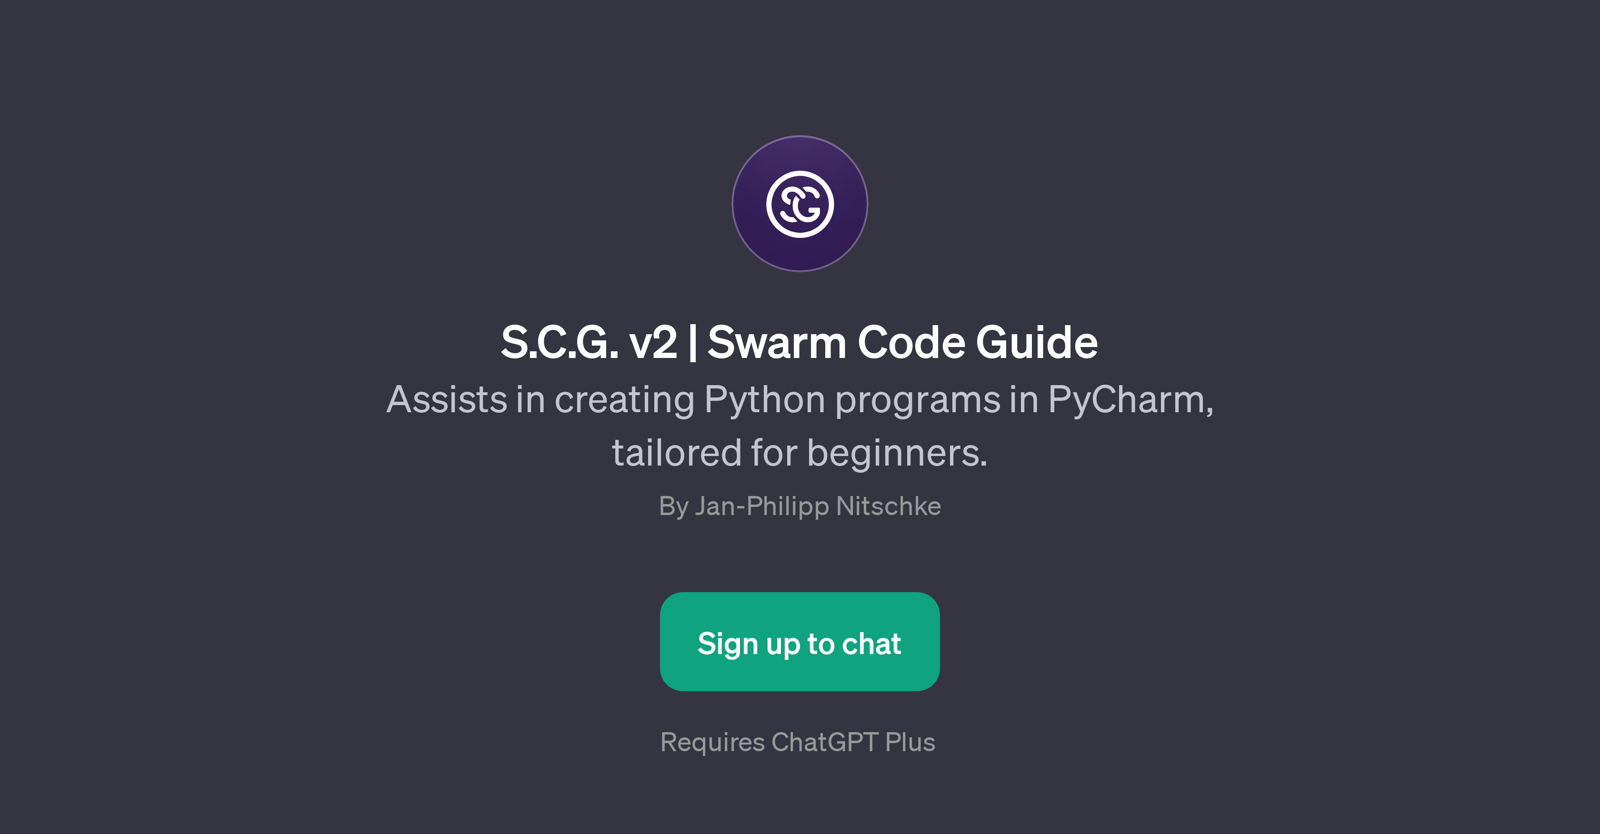 S.C.G. v2 | Swarm Code Guide website